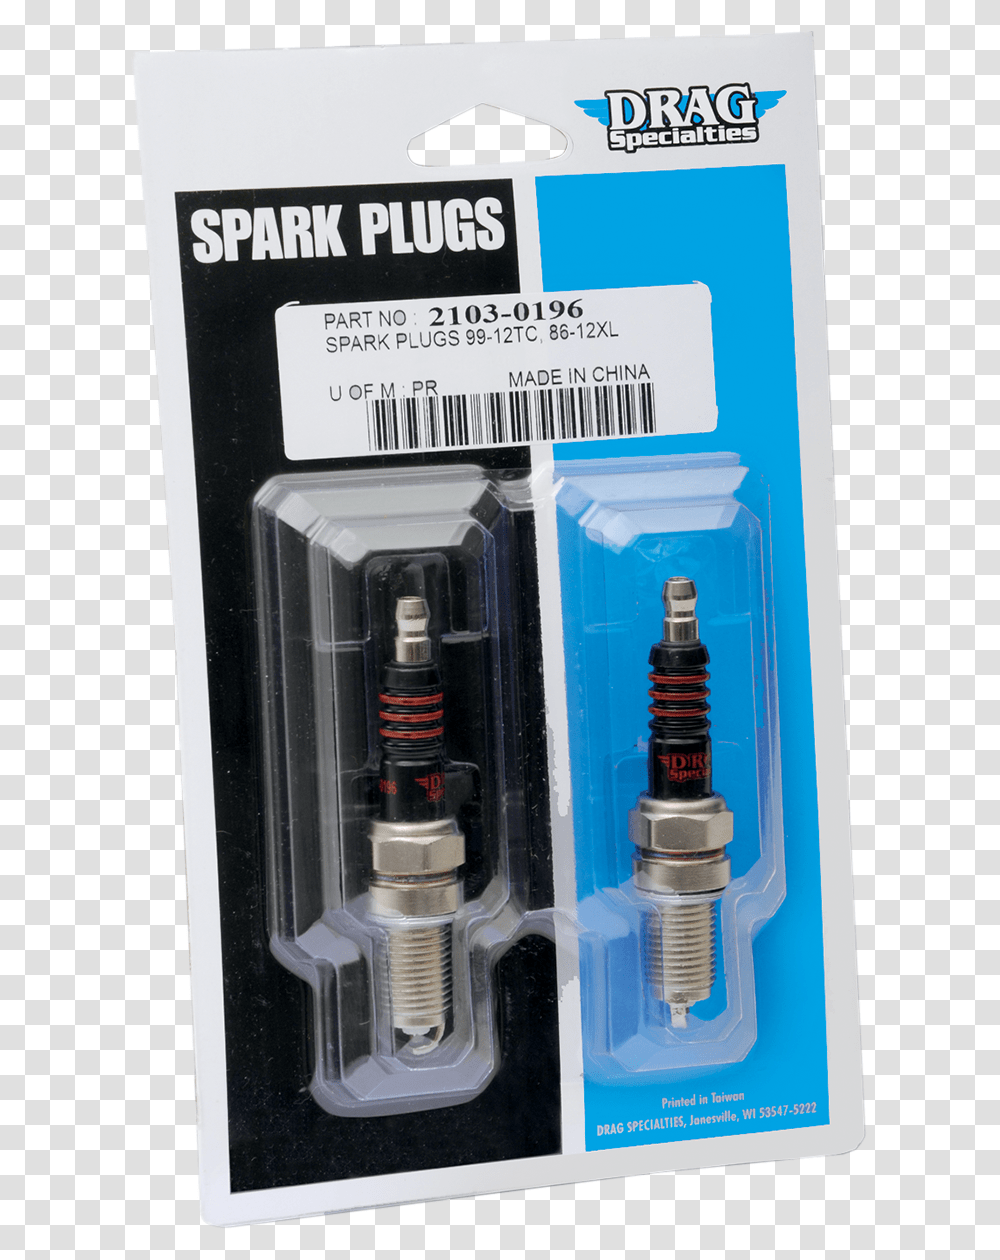 Spark Plugs 99 17tcxl Drag Specialties, Mixer, Appliance, Electrical Device, Suspension Transparent Png